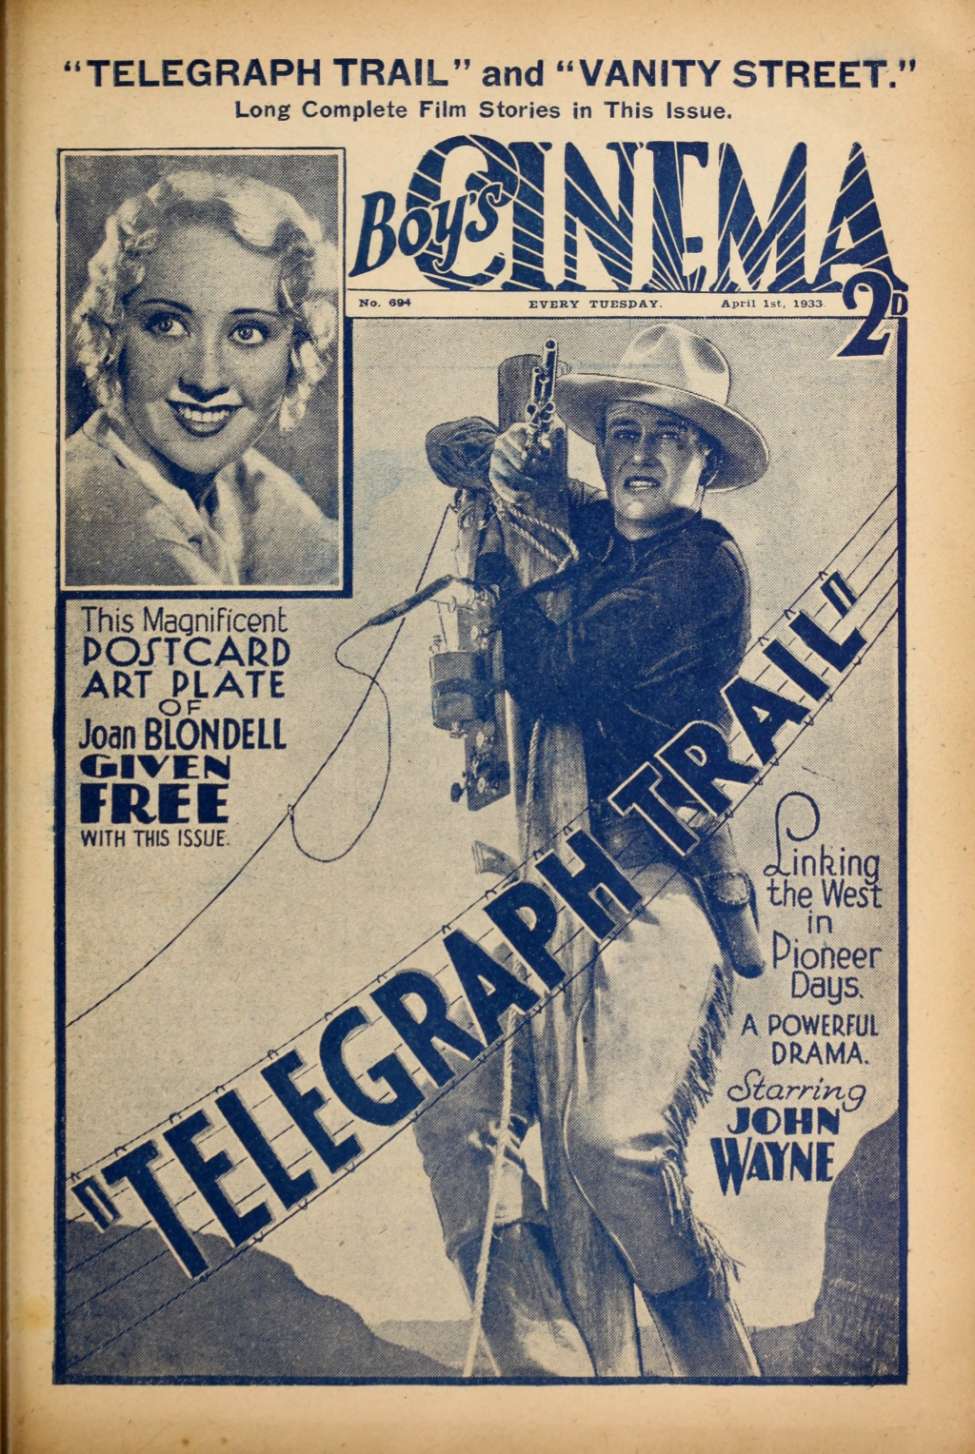 Comic Book Cover For Boy's Cinema 694 - The Telegraph Trail - John Wayne